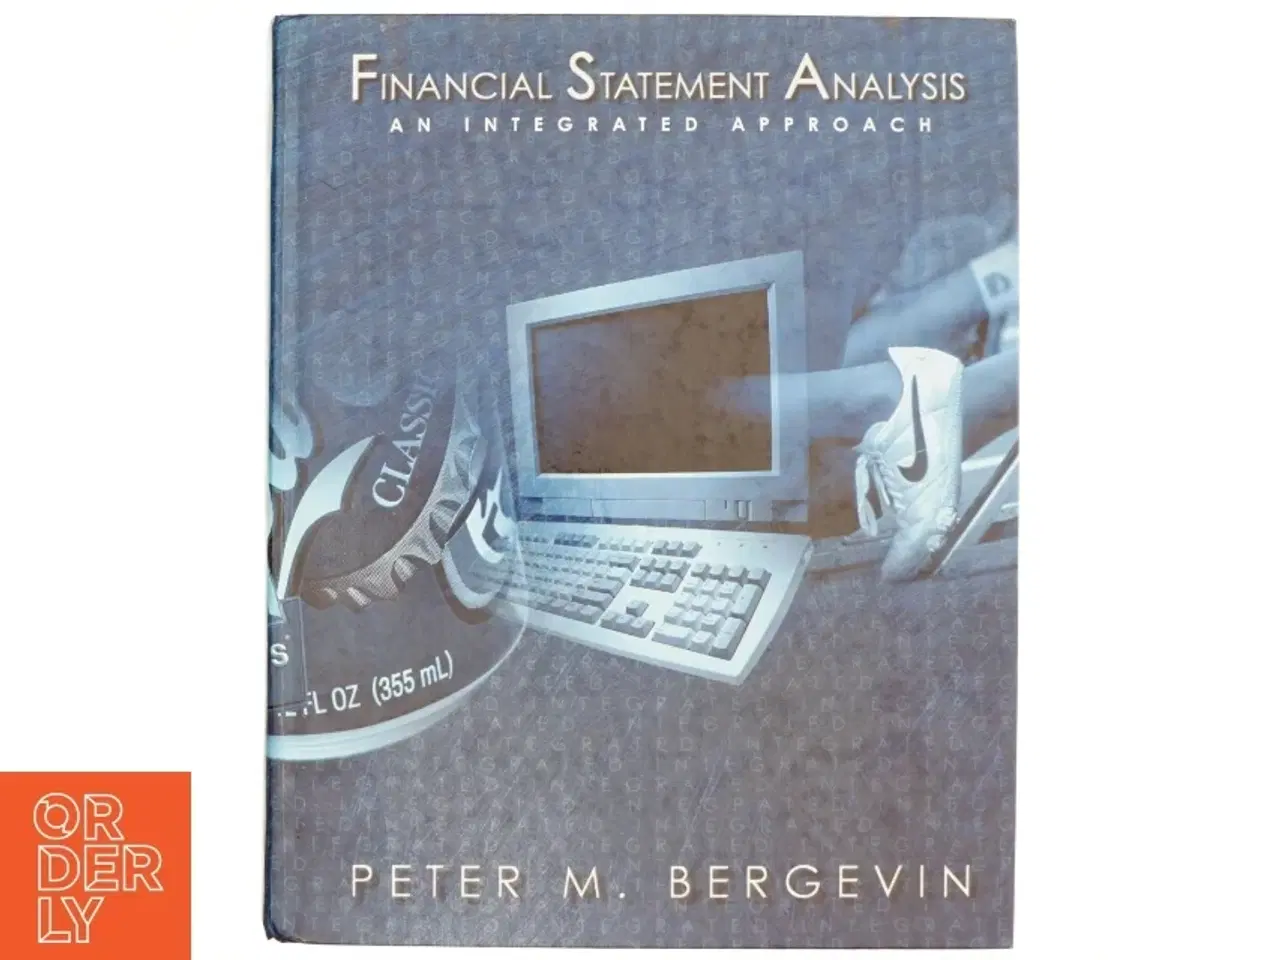 Billede 1 - Financial statement analysis : An integrated approach af Peter M. Bergevin (Bog)